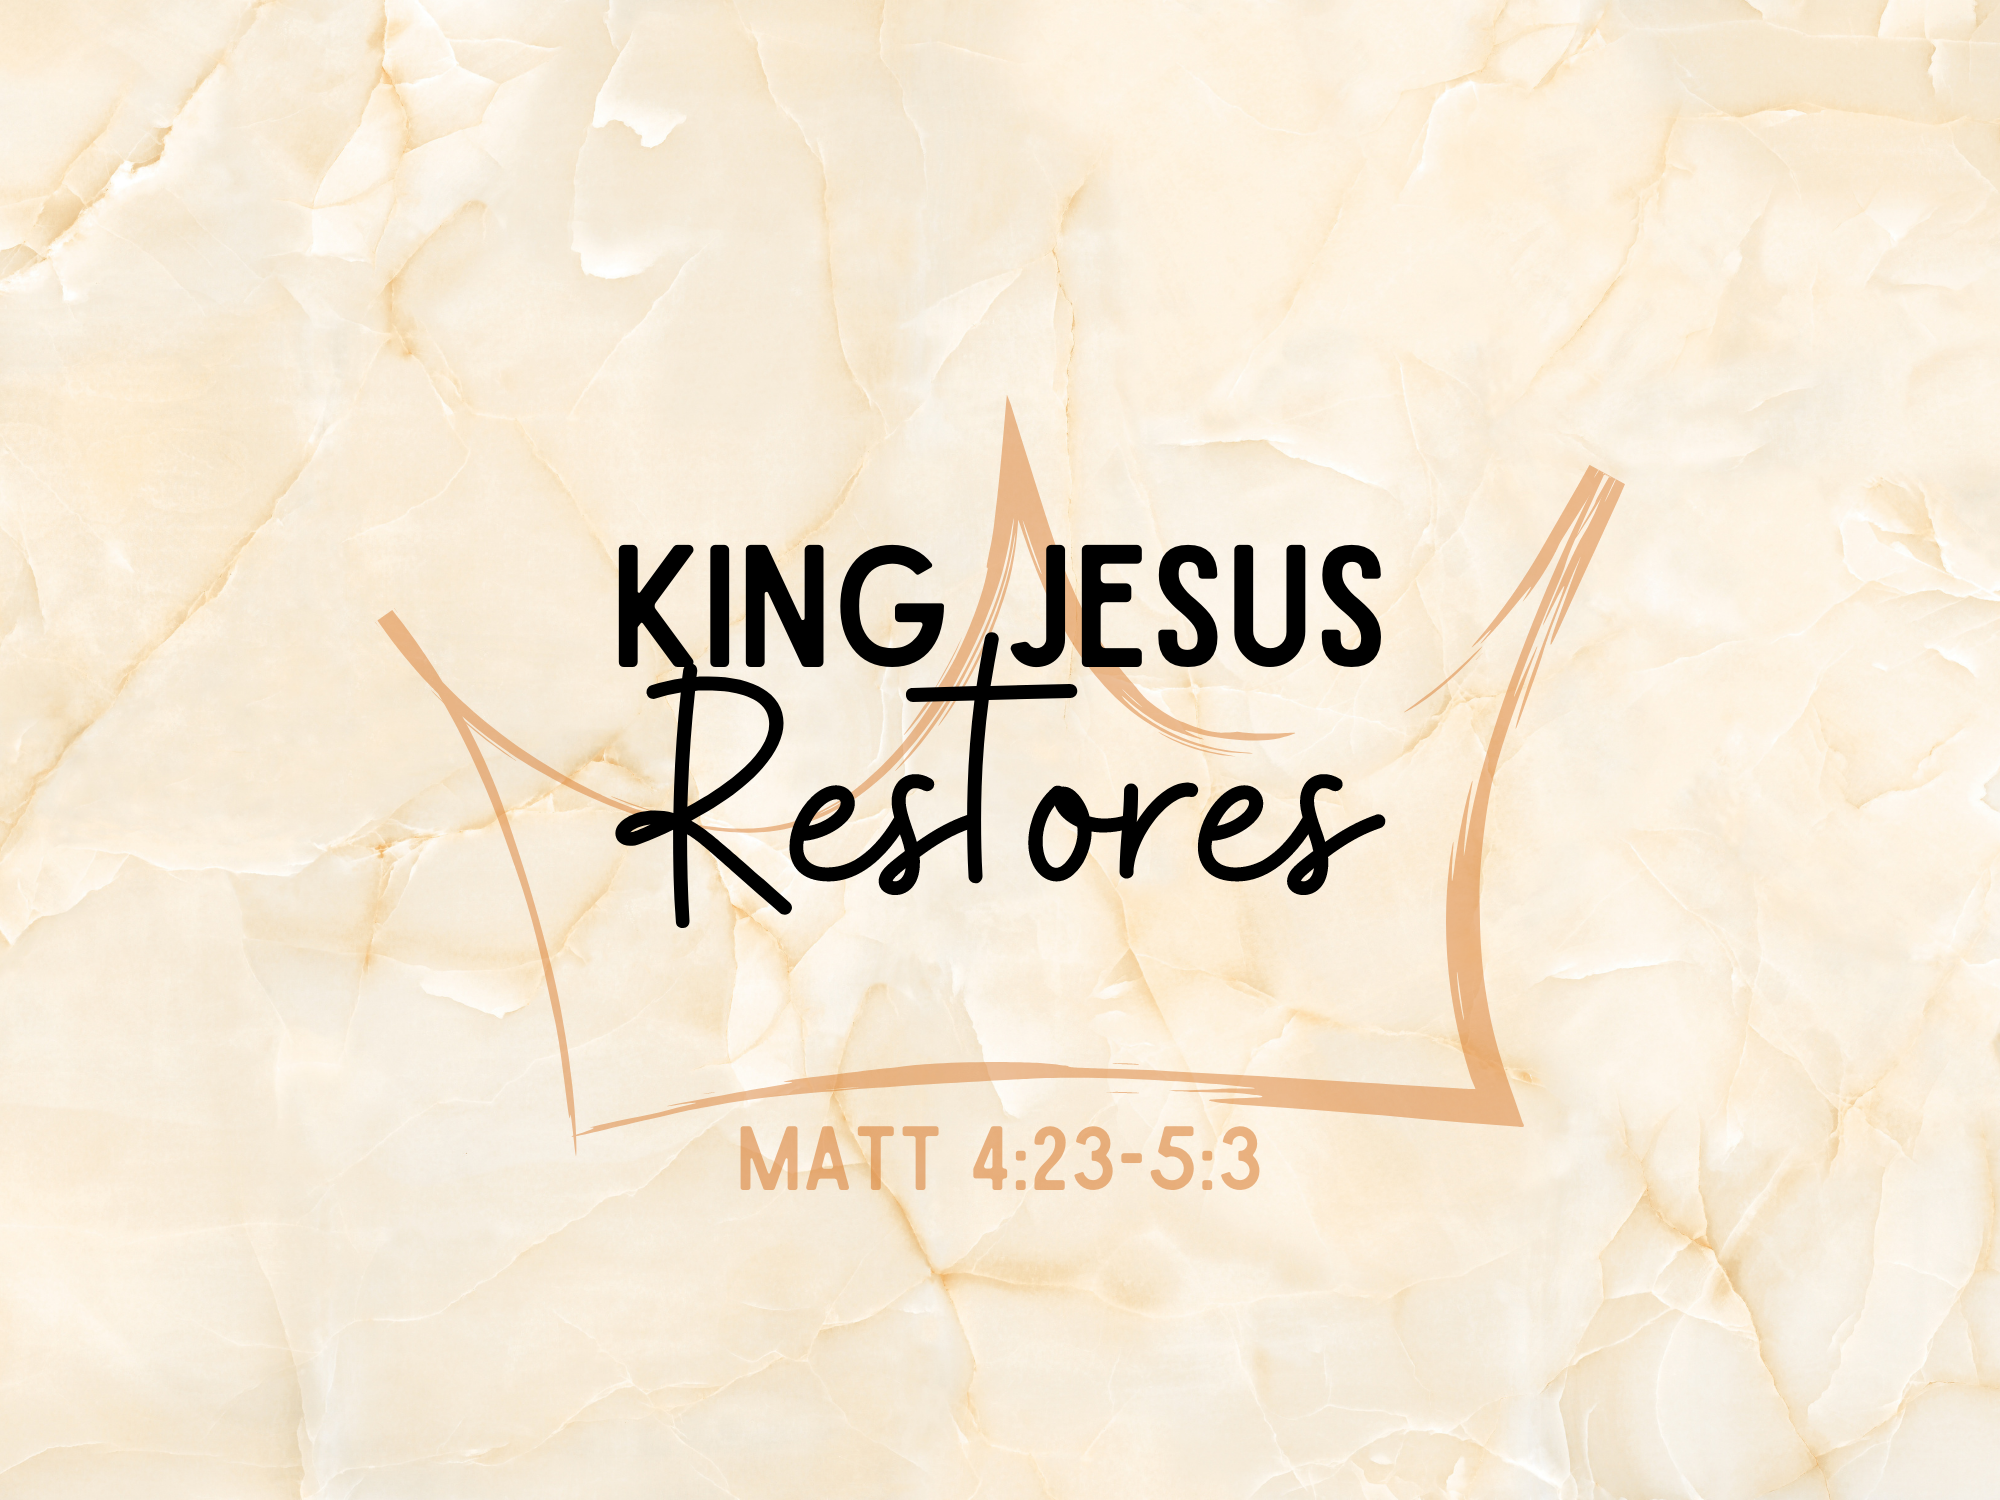 King Jesus Restores